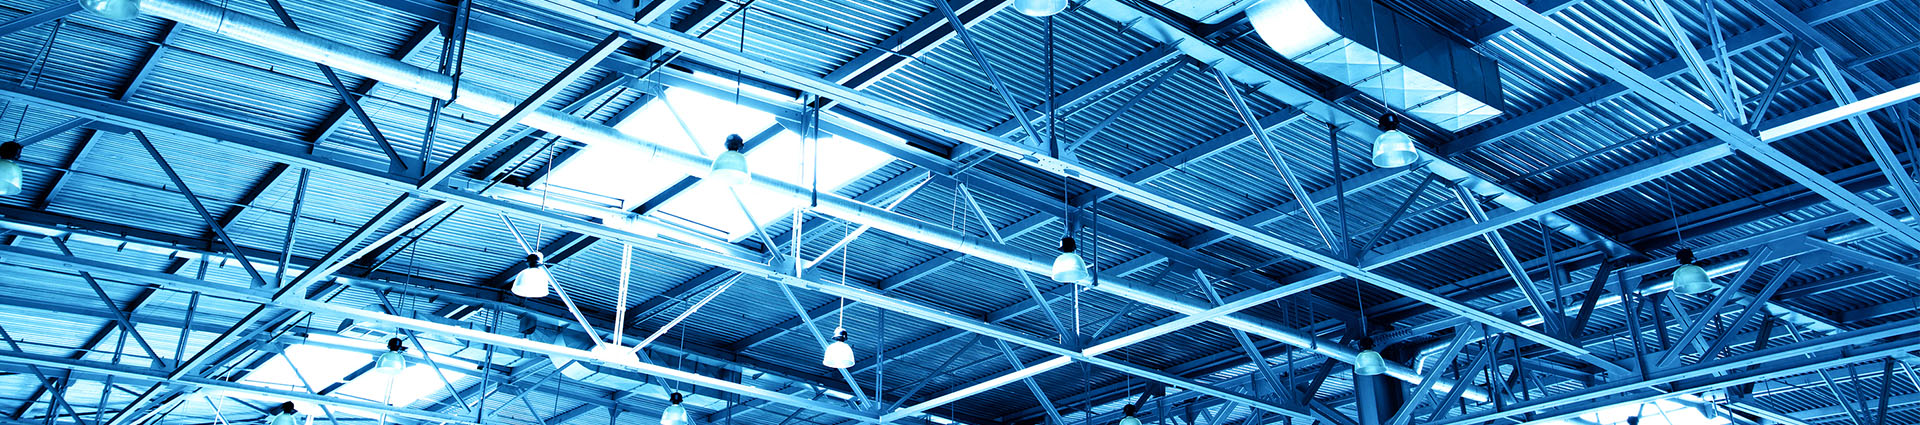 industrial storehouse ceiling lighting hvac system